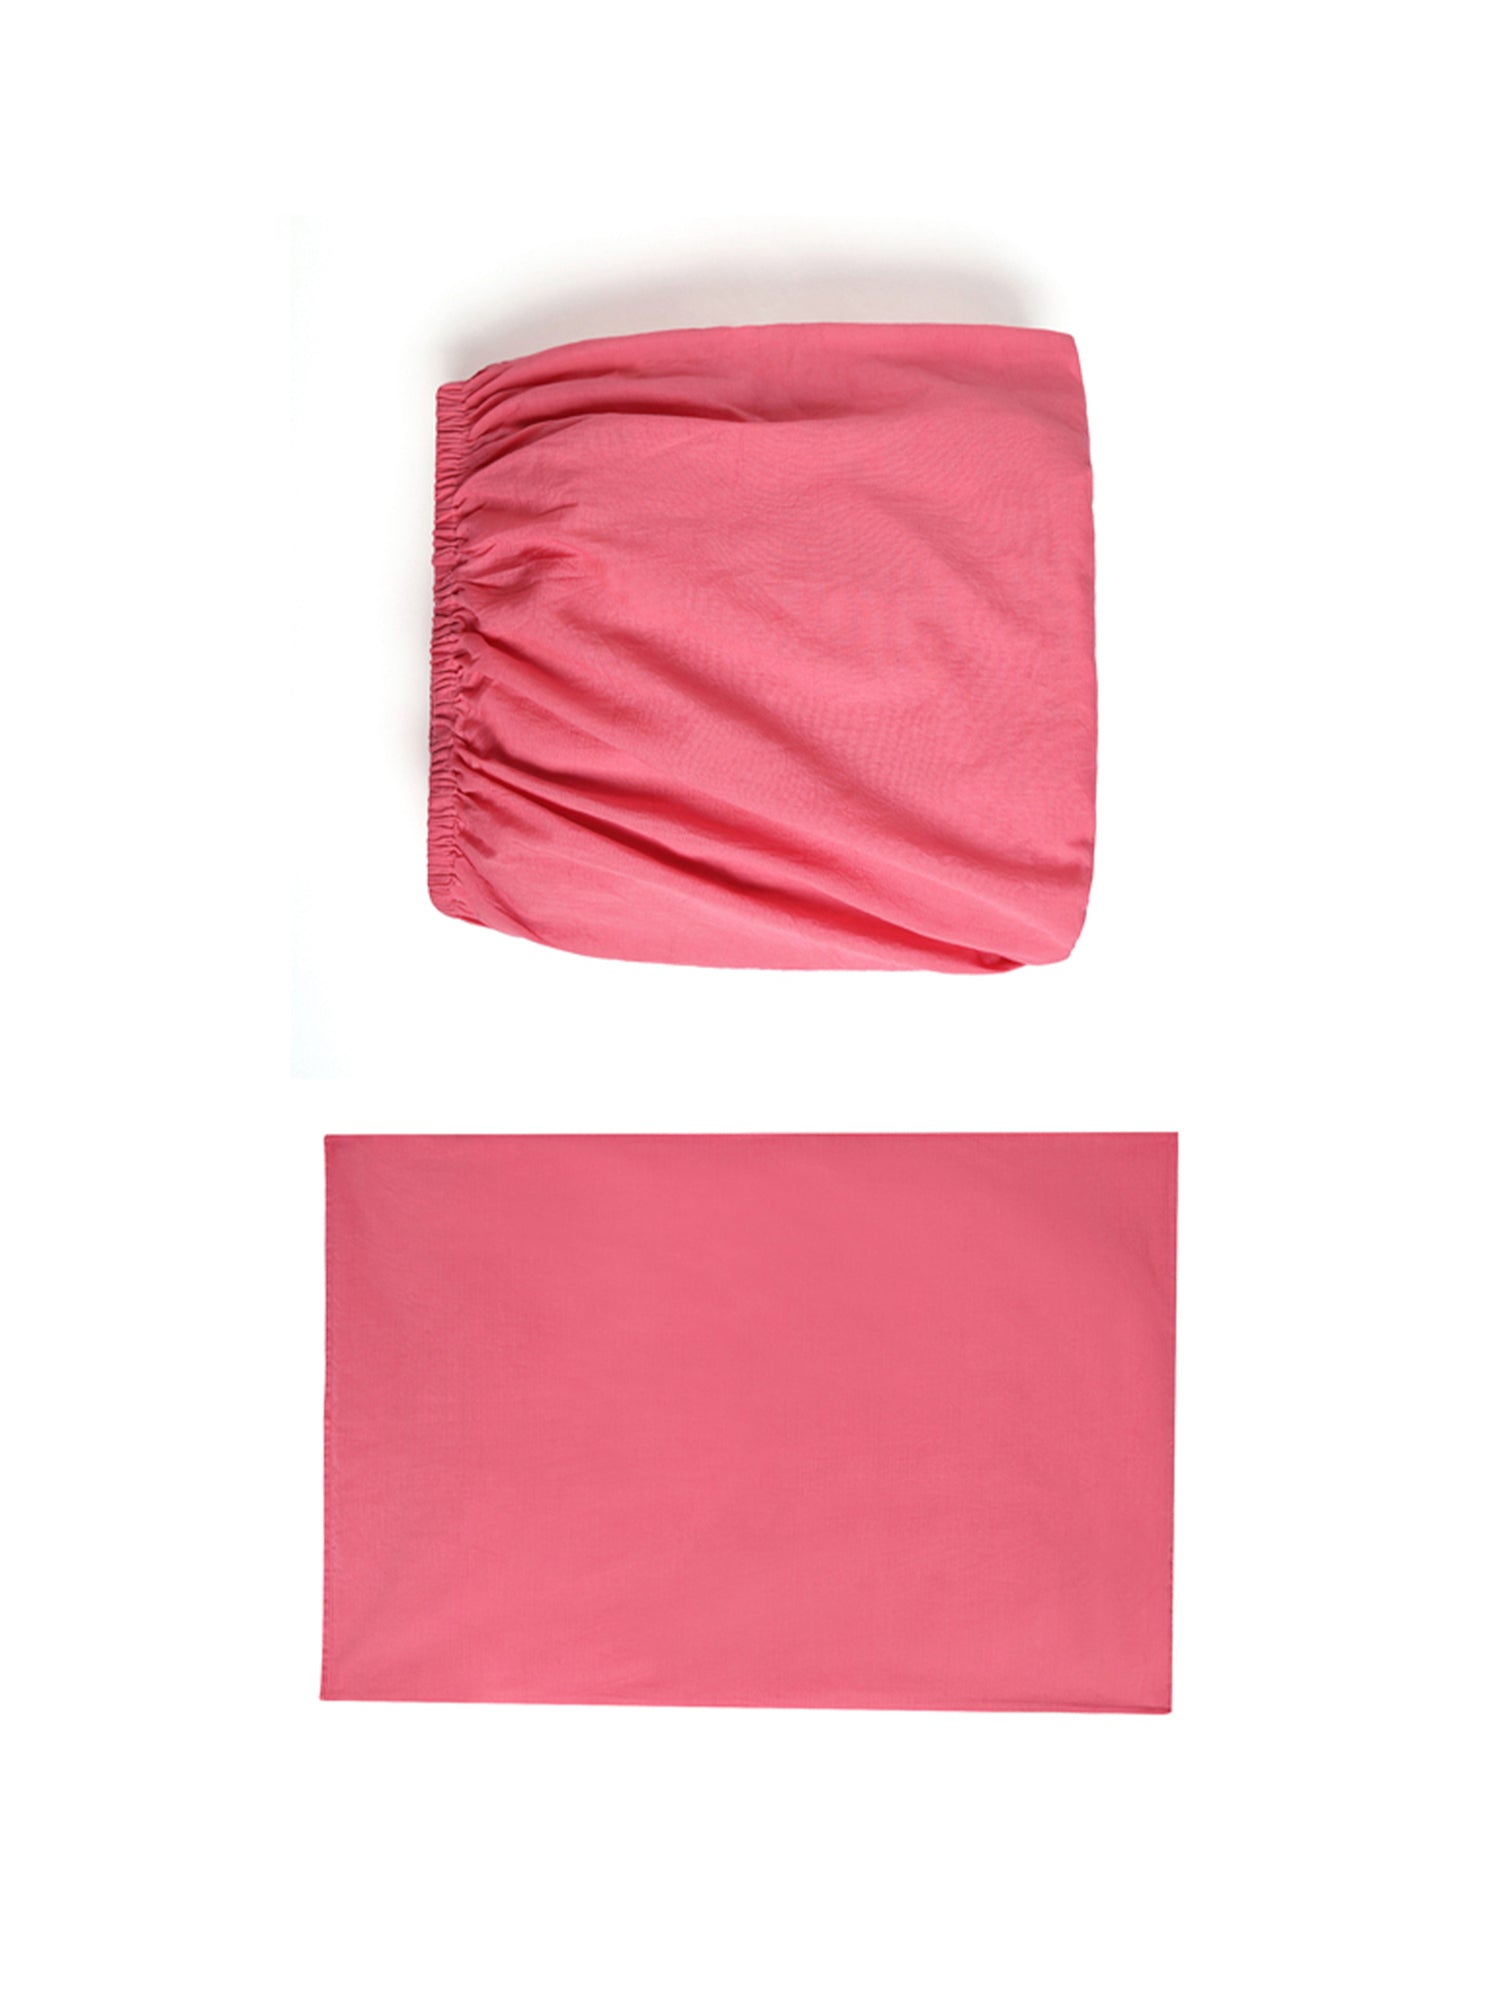 Seminyak Pink Fitted Twin Sheet & Pillowcase Set